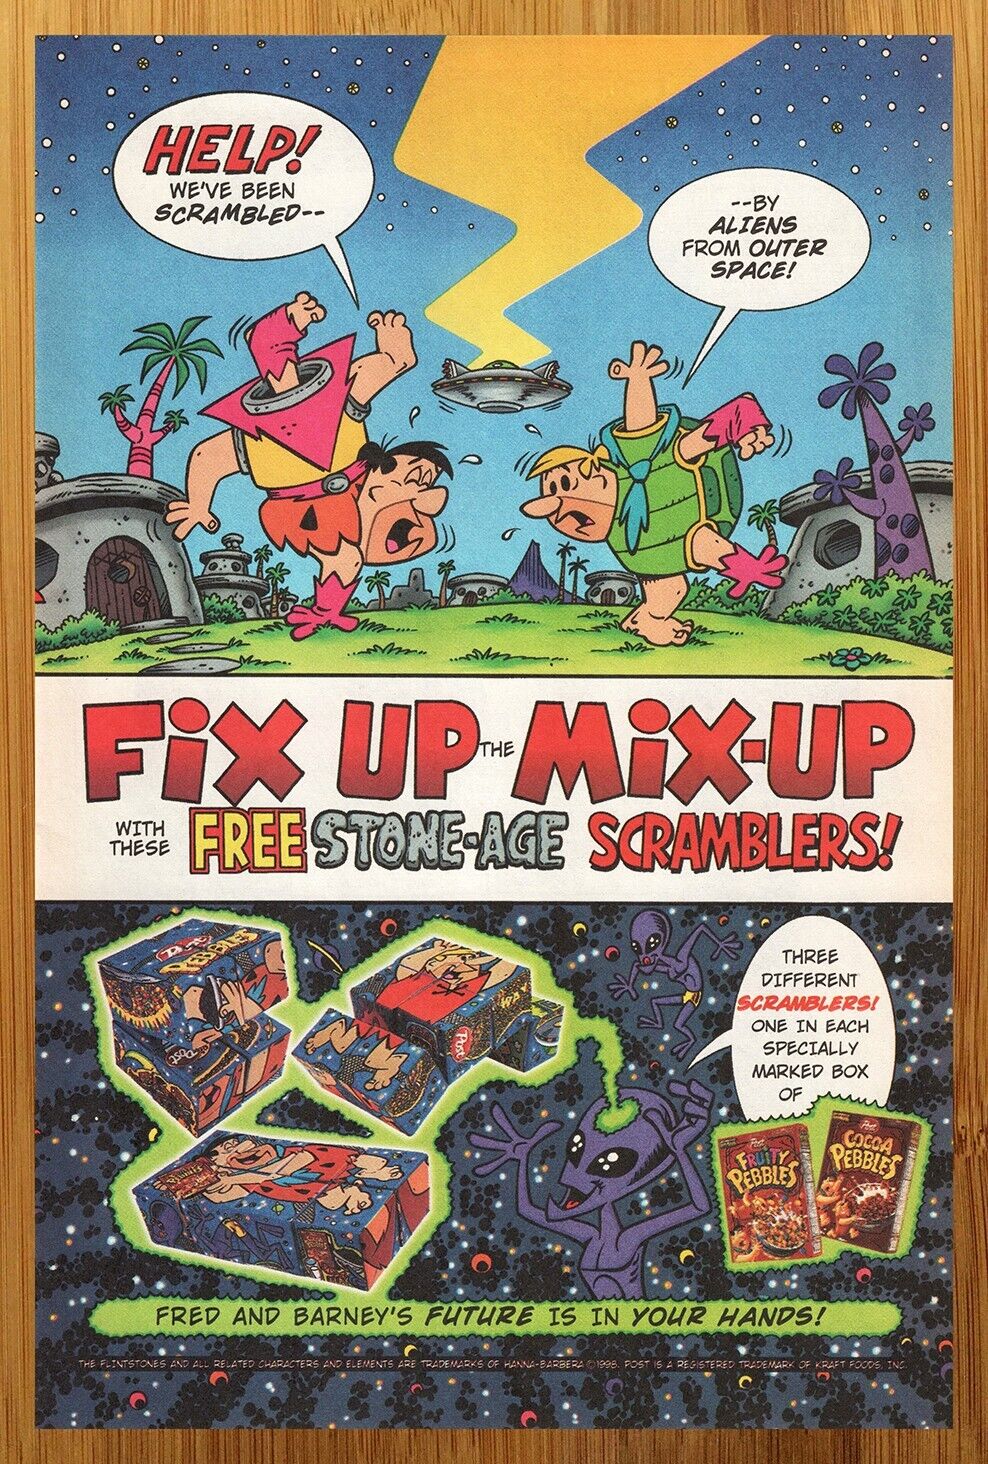 1998 Fruity/Cocoa Pebbles Cereal Print Ad/Poster Flintstones Retro Food Art 90s